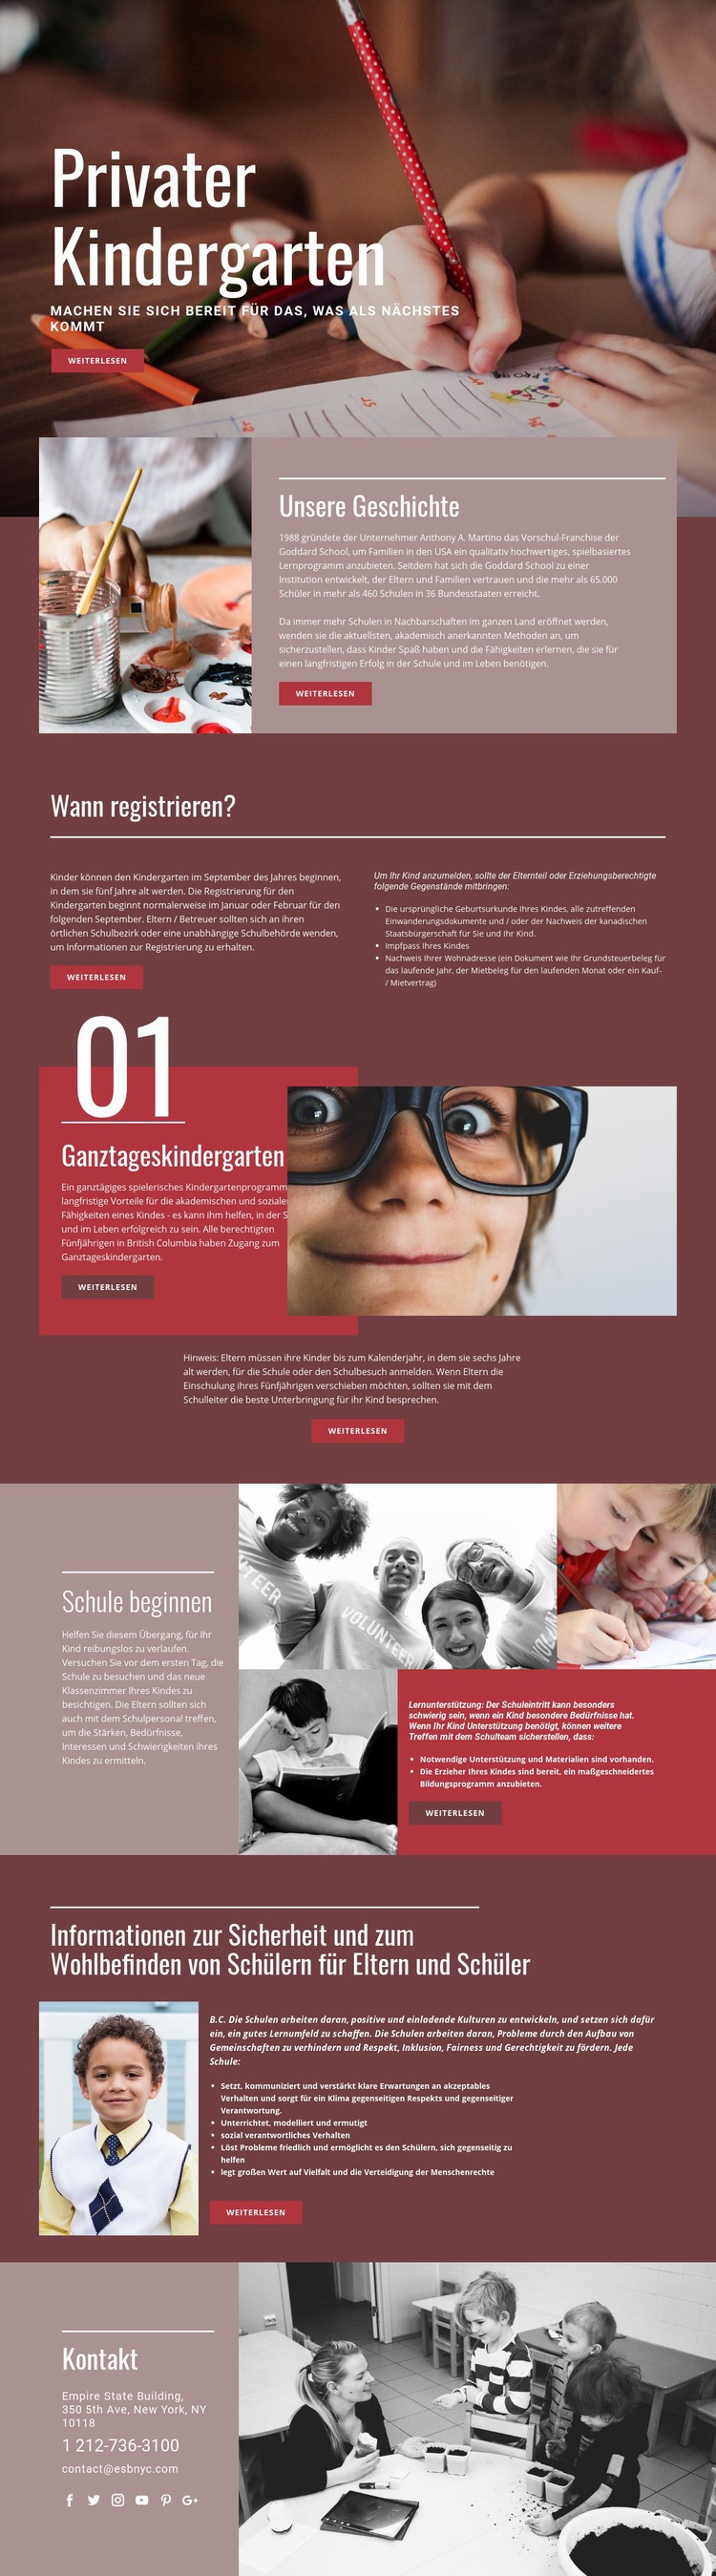 Private Grundschulbildung Website design